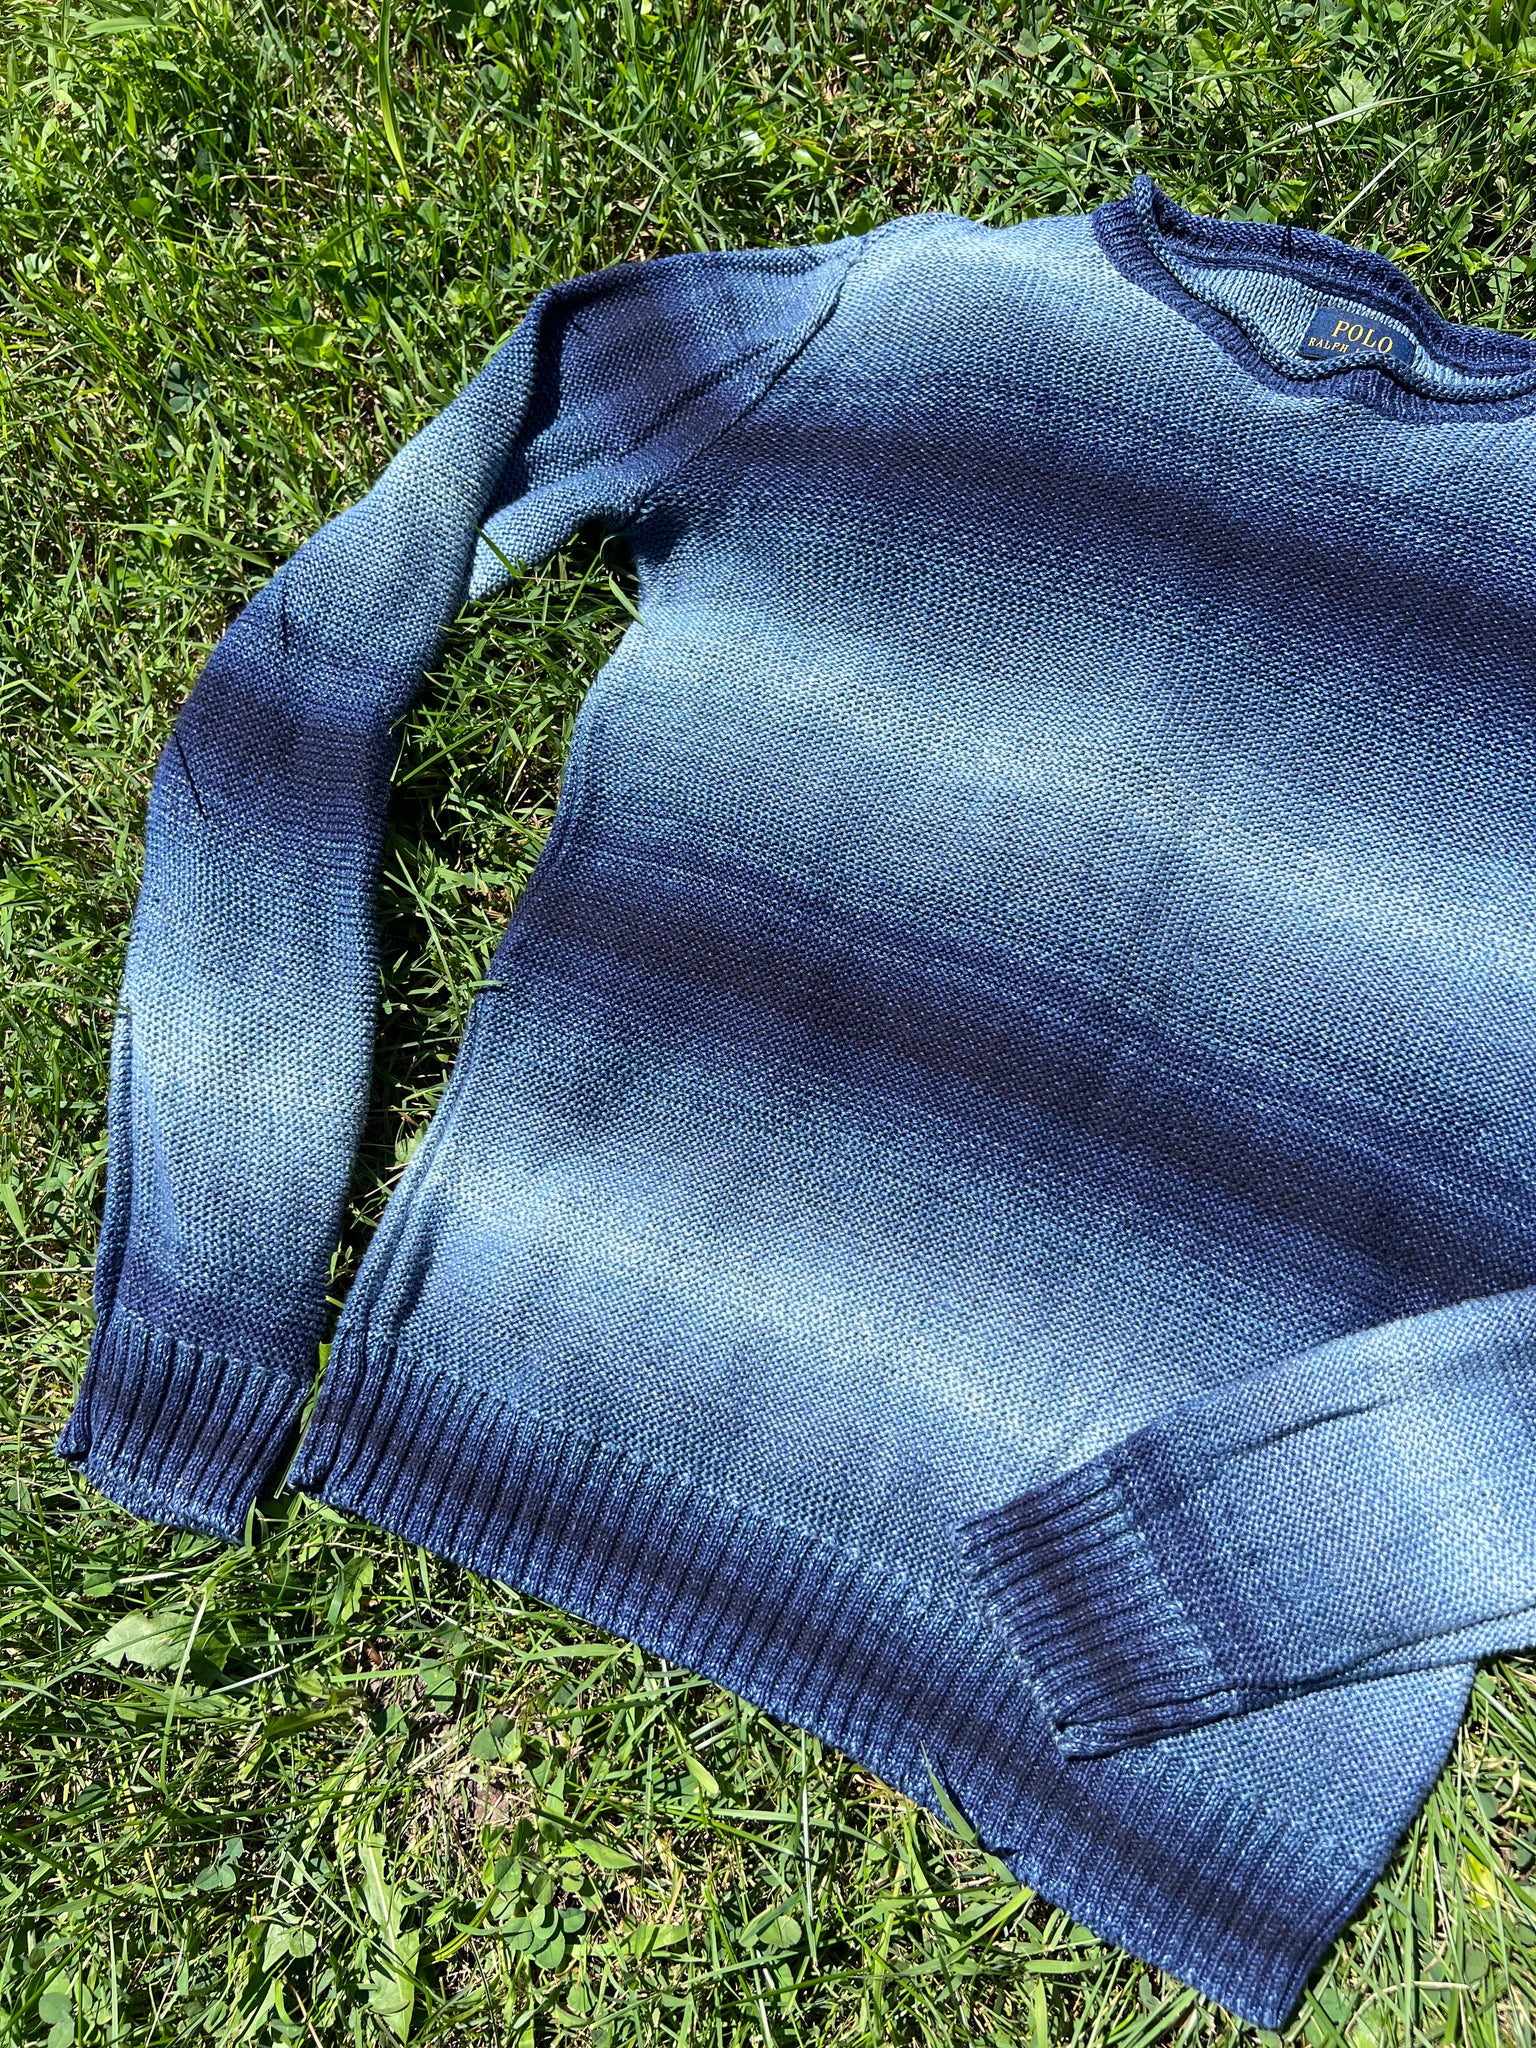 Blue Ombré Sweater by Polo Ralph Lauren